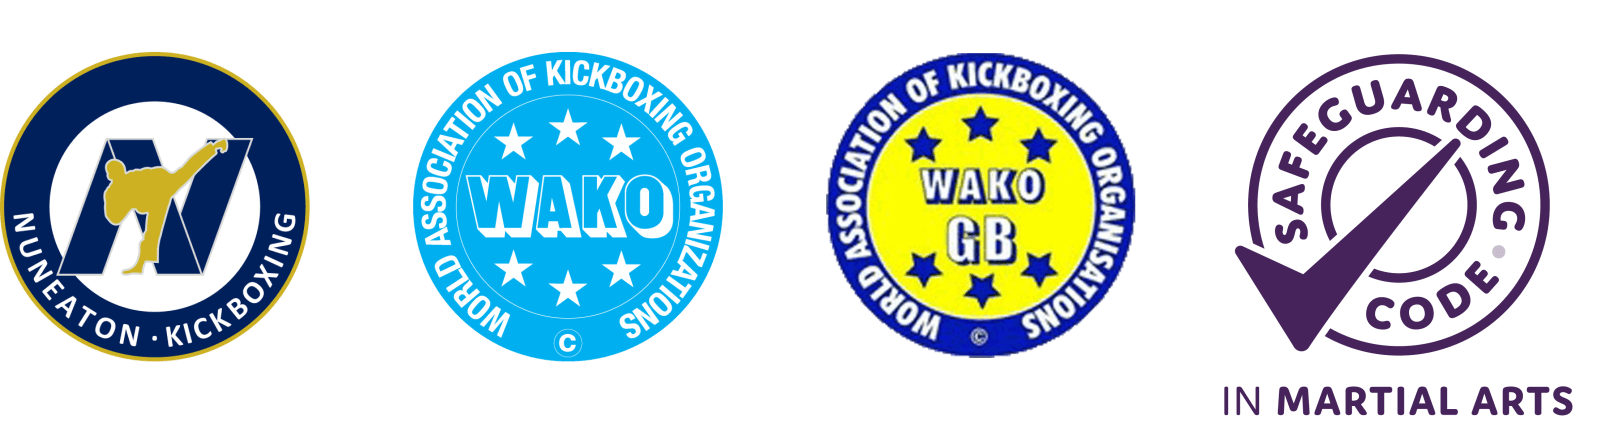 Nuneaton Kickboxing affiliations